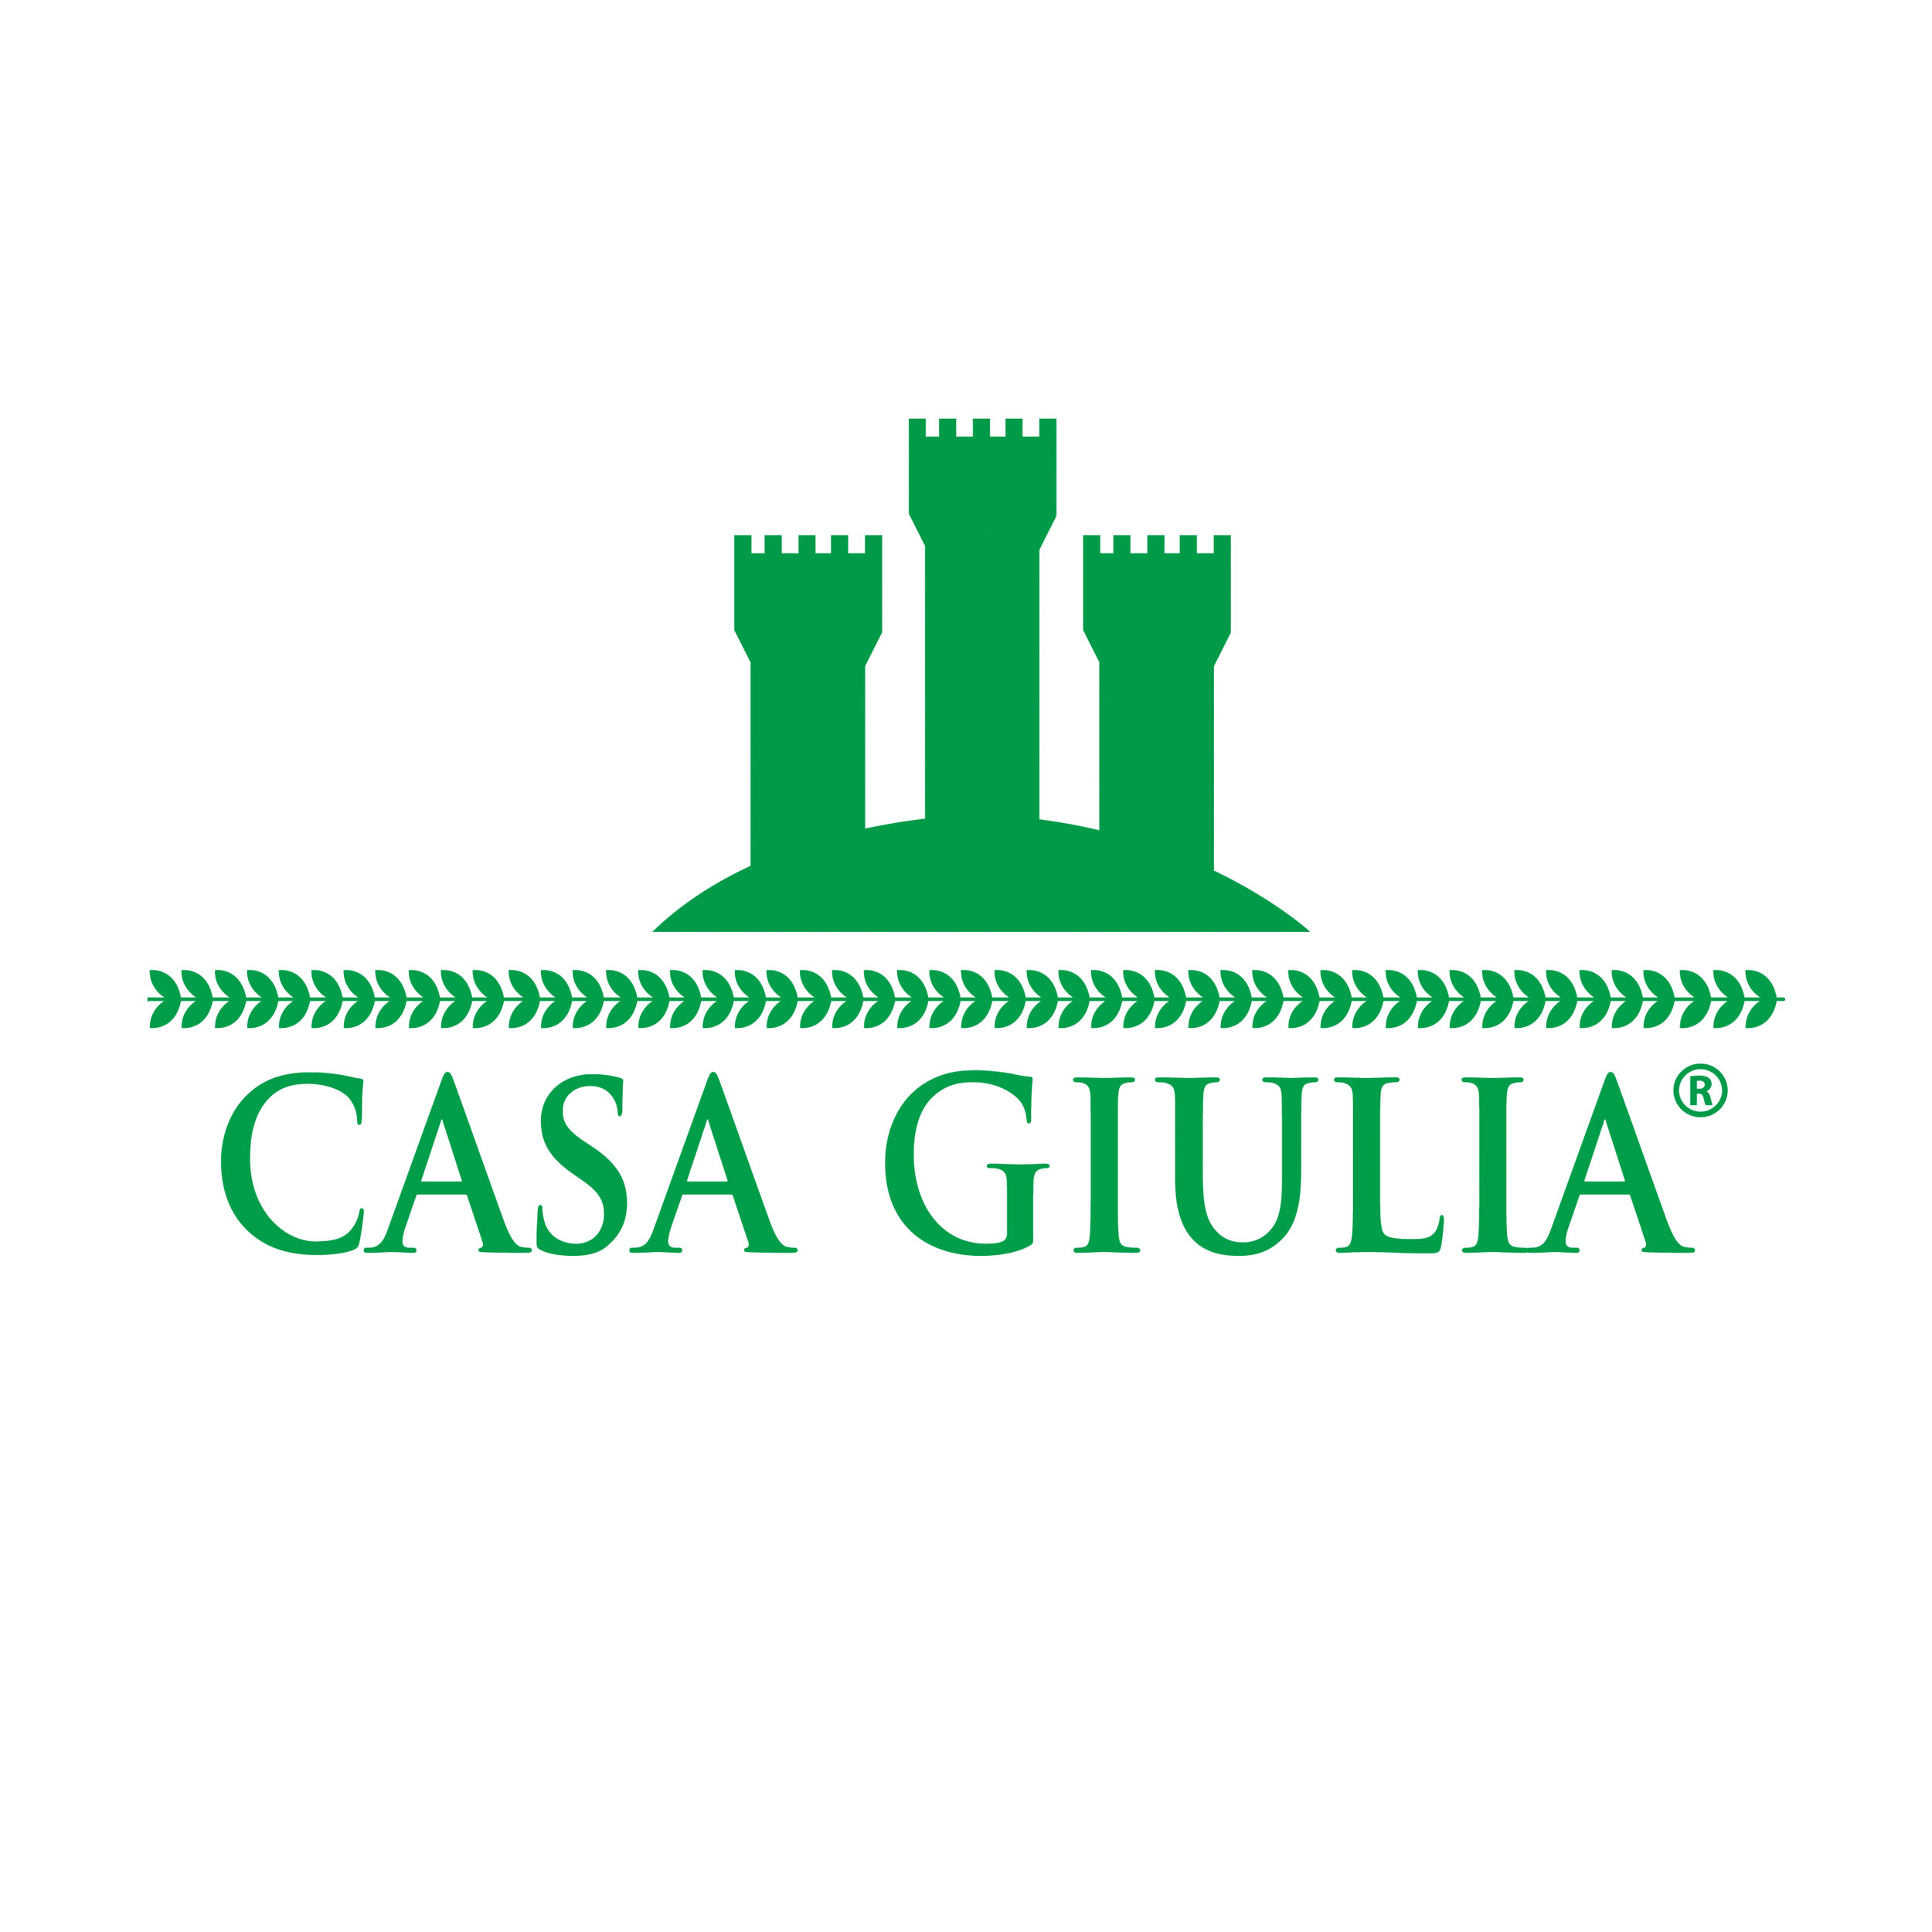 Casa Guilia website carousel.jpg